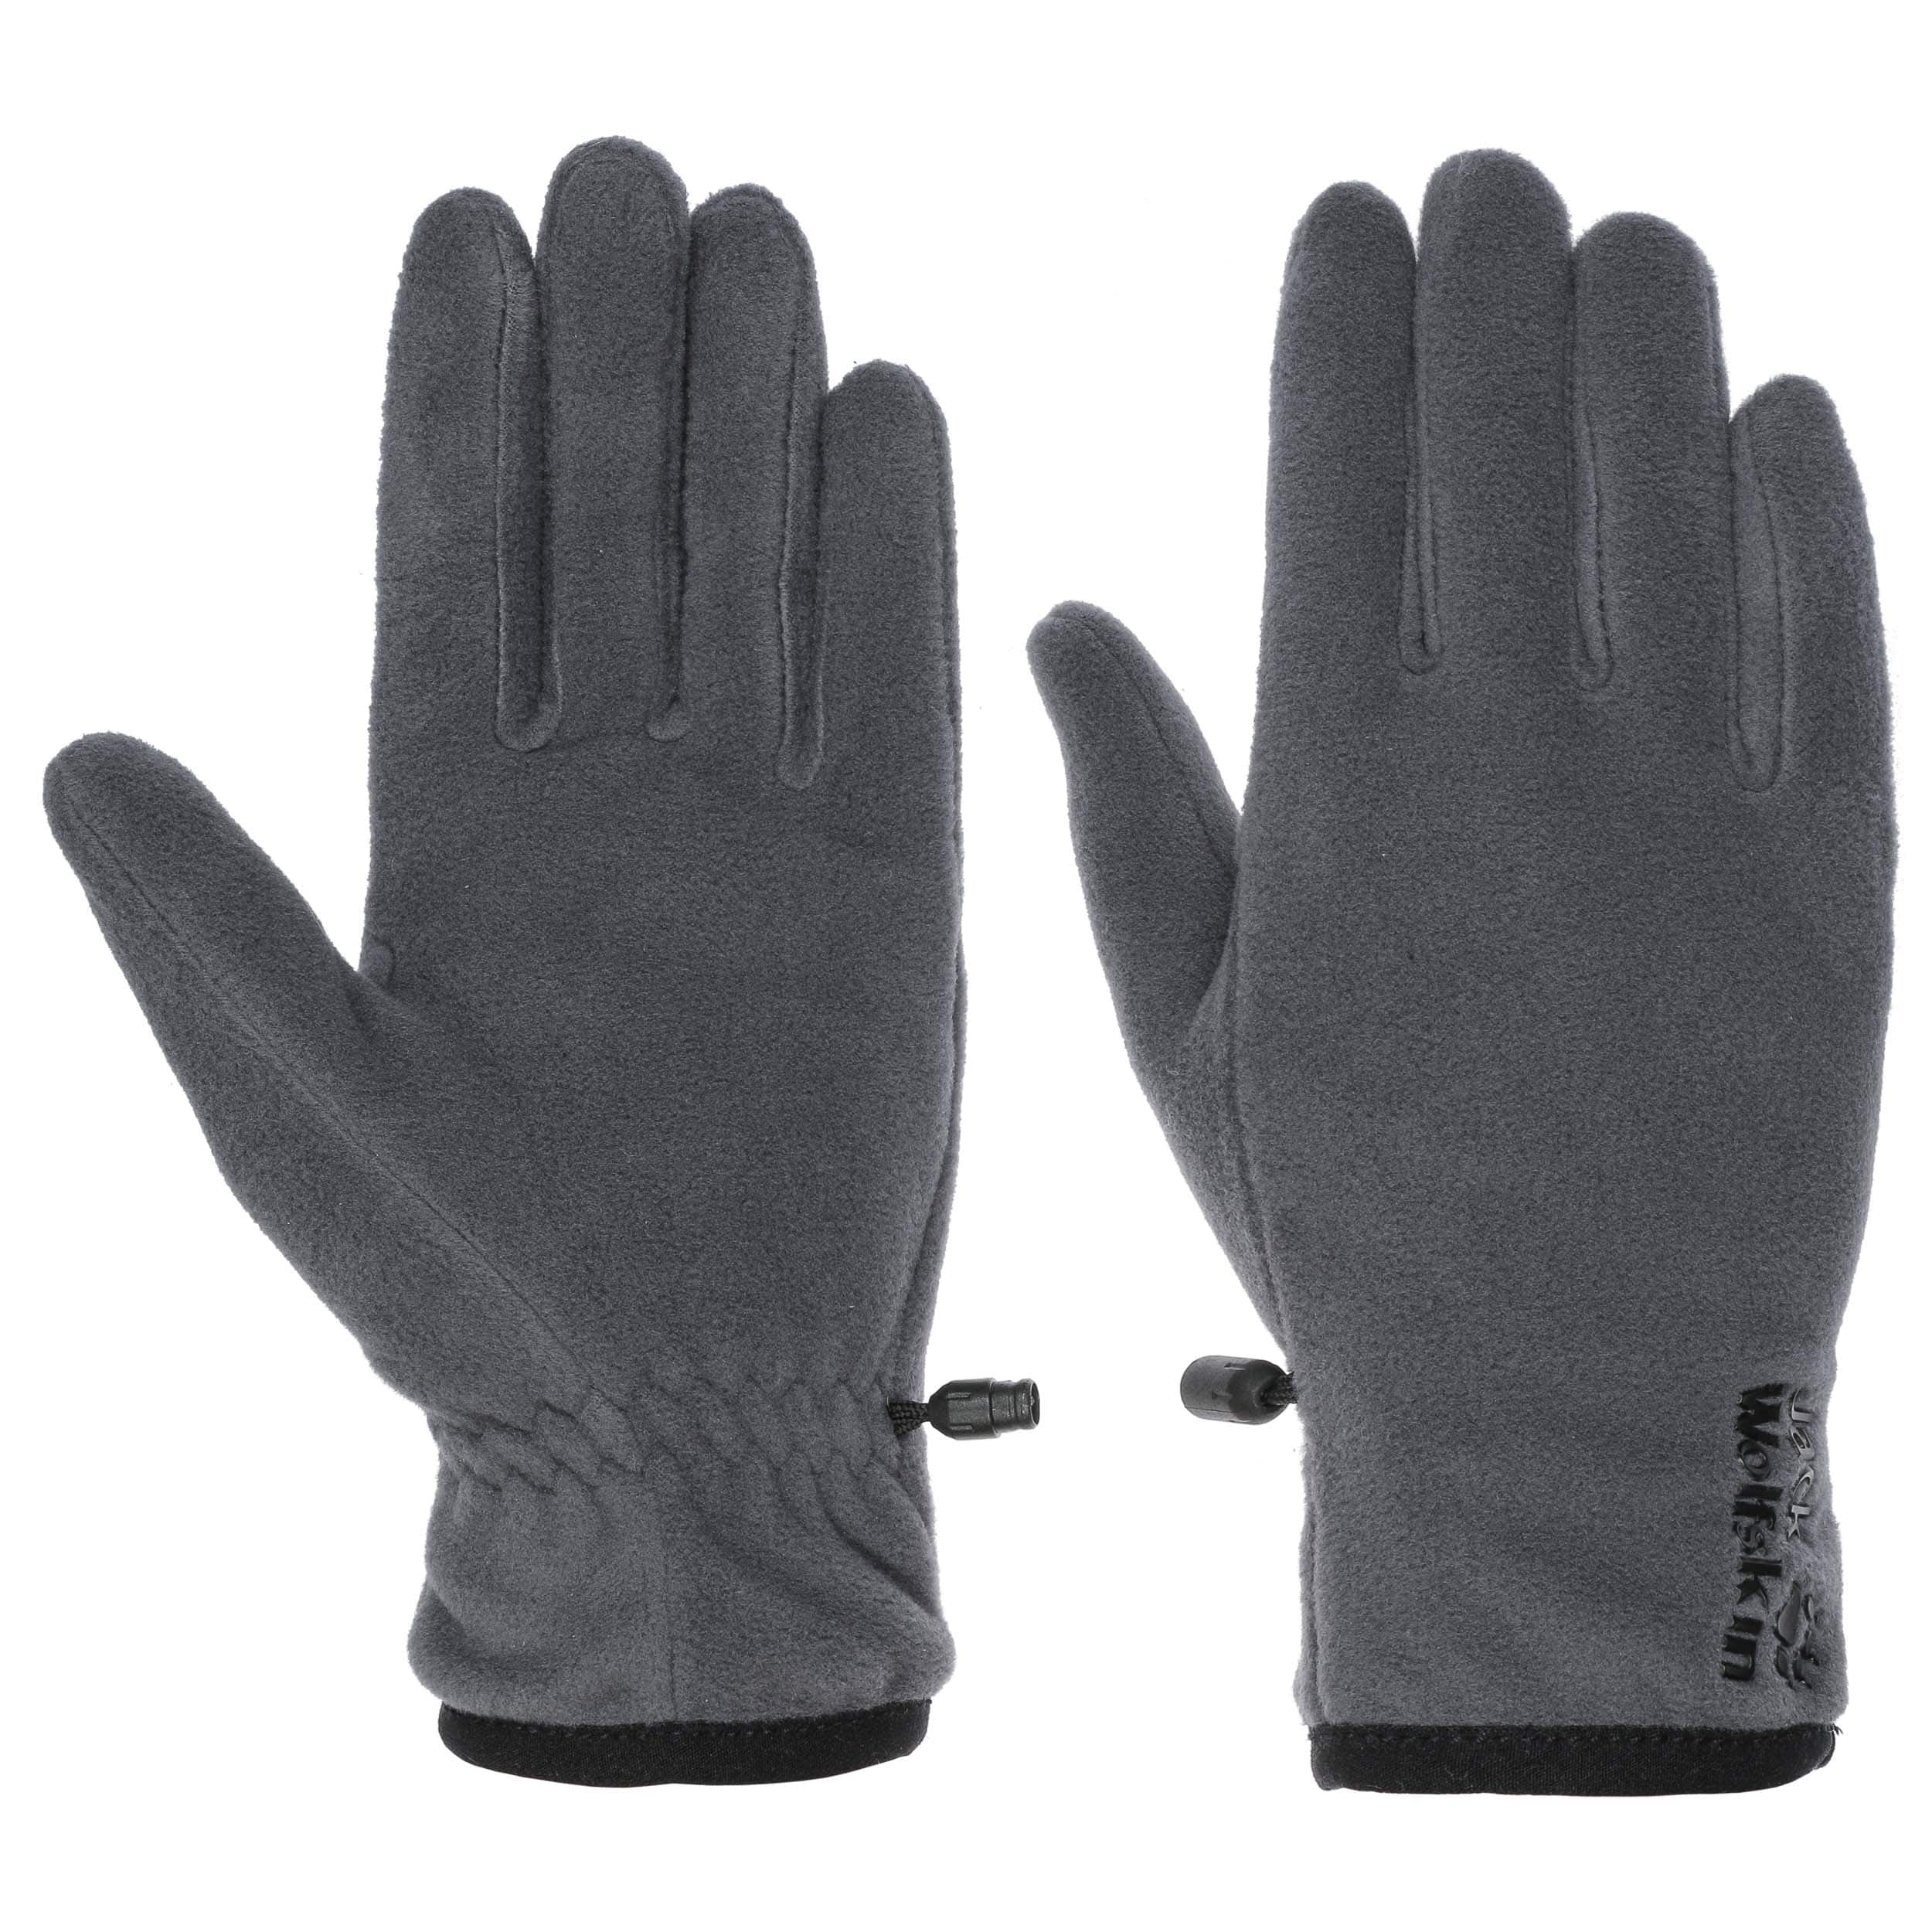 Nanuk Ecosphere Handschuhe by Jack Wolfskin - 33,95 CHF | Fleecehandschuhe